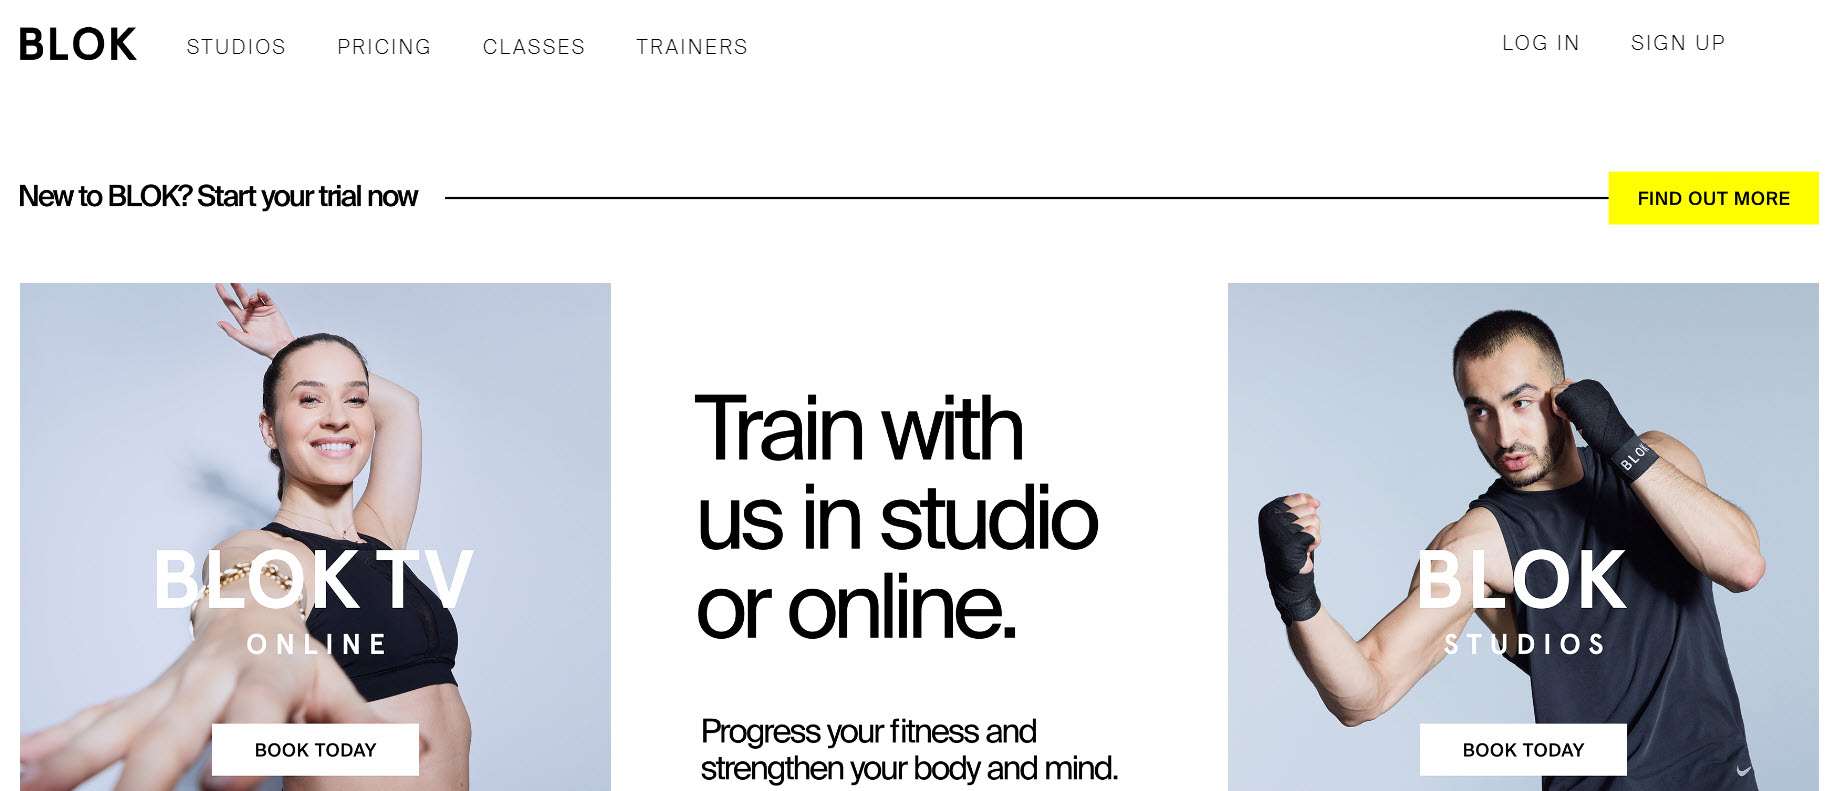 Gym website design - inspiration from Blok